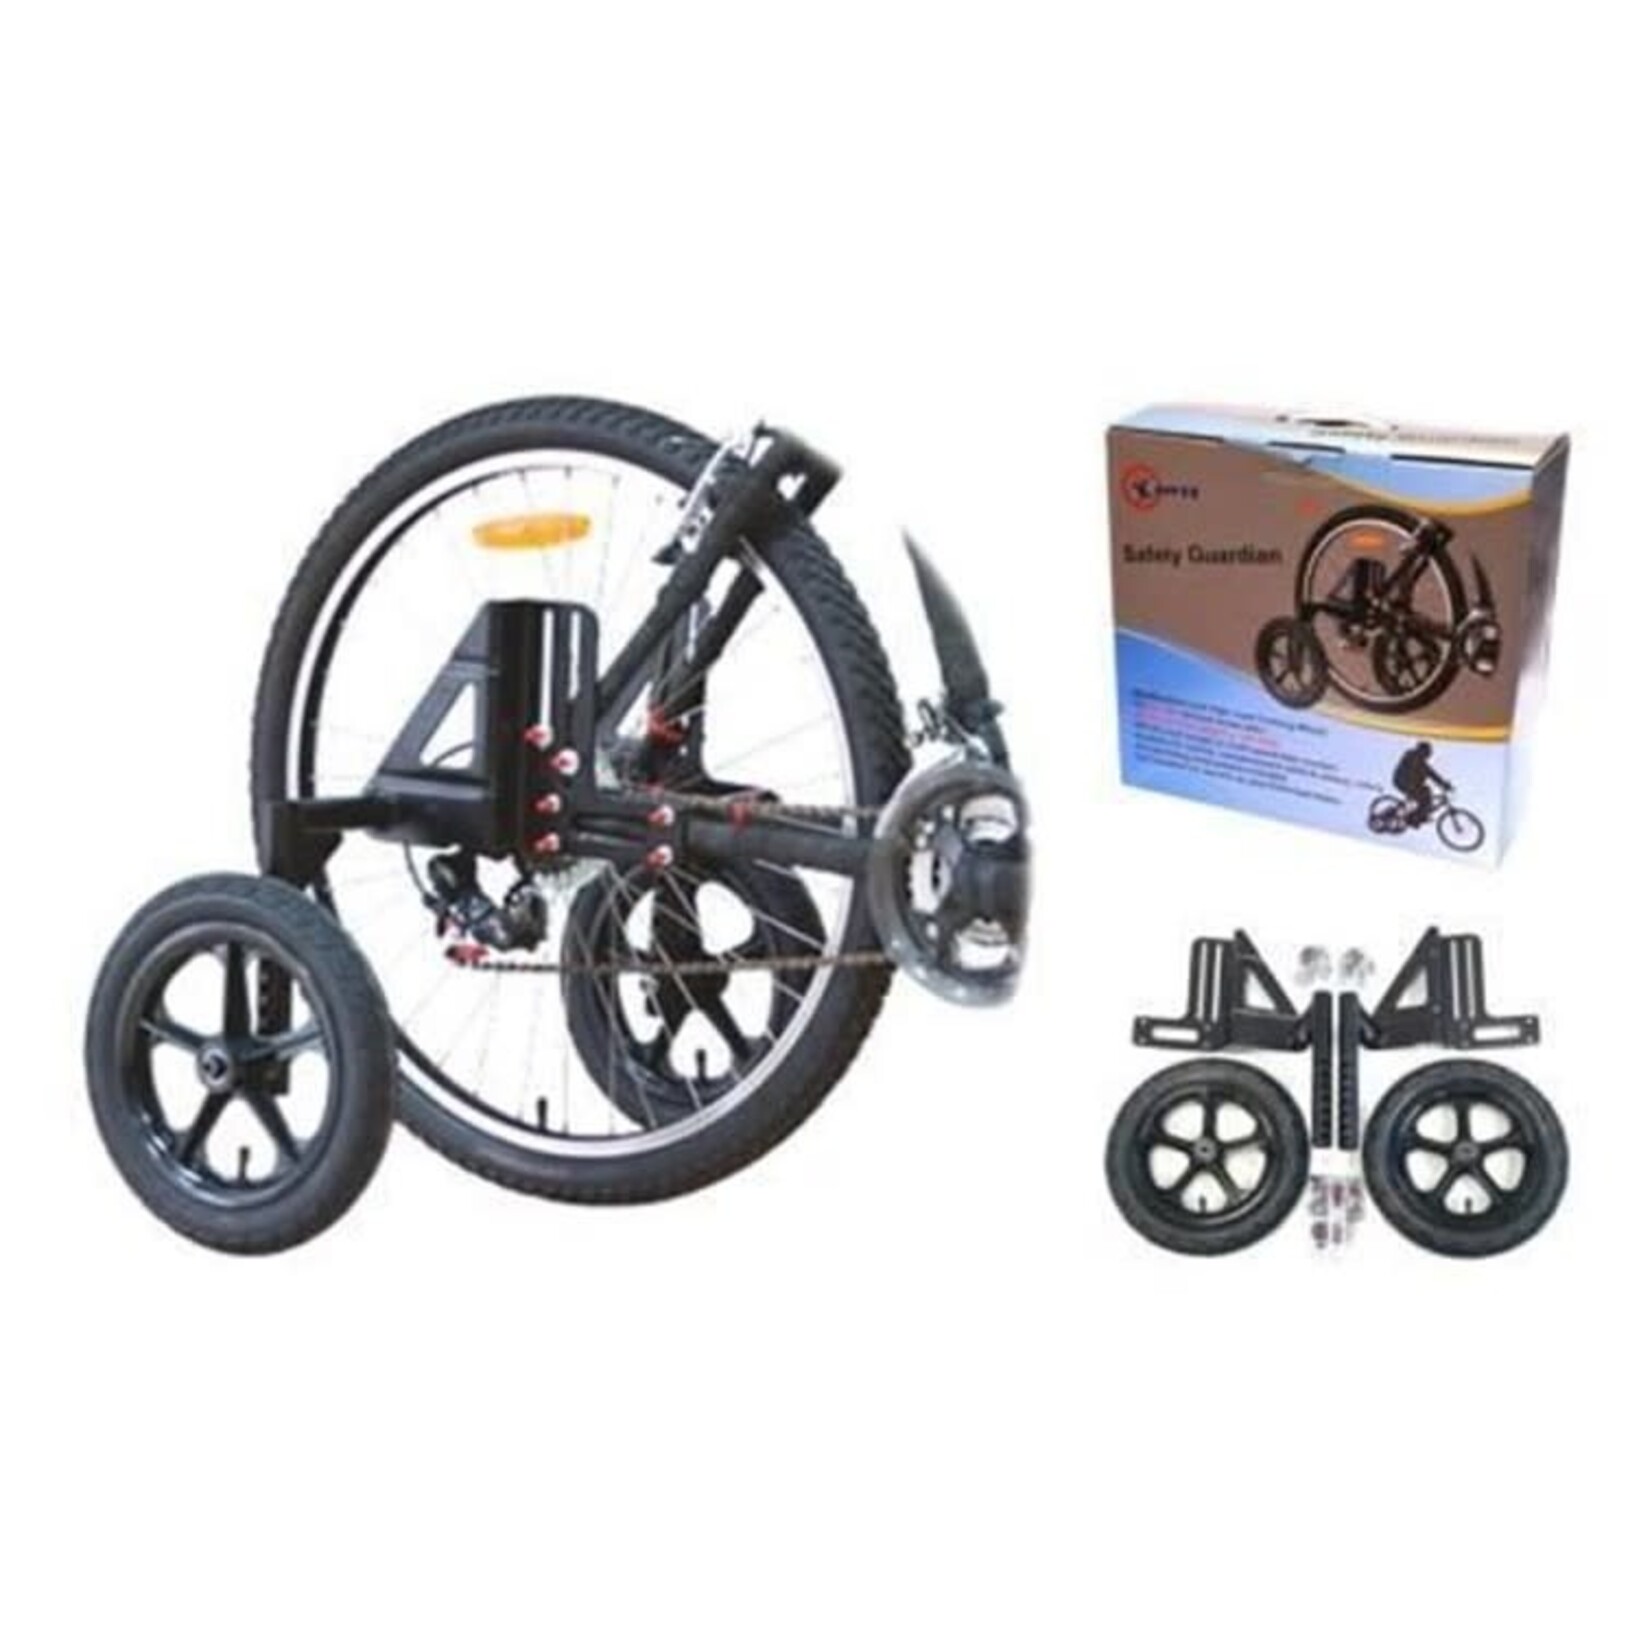 Adult Training Wheels 20-29 Inch Wheels Pneumatic Tyres